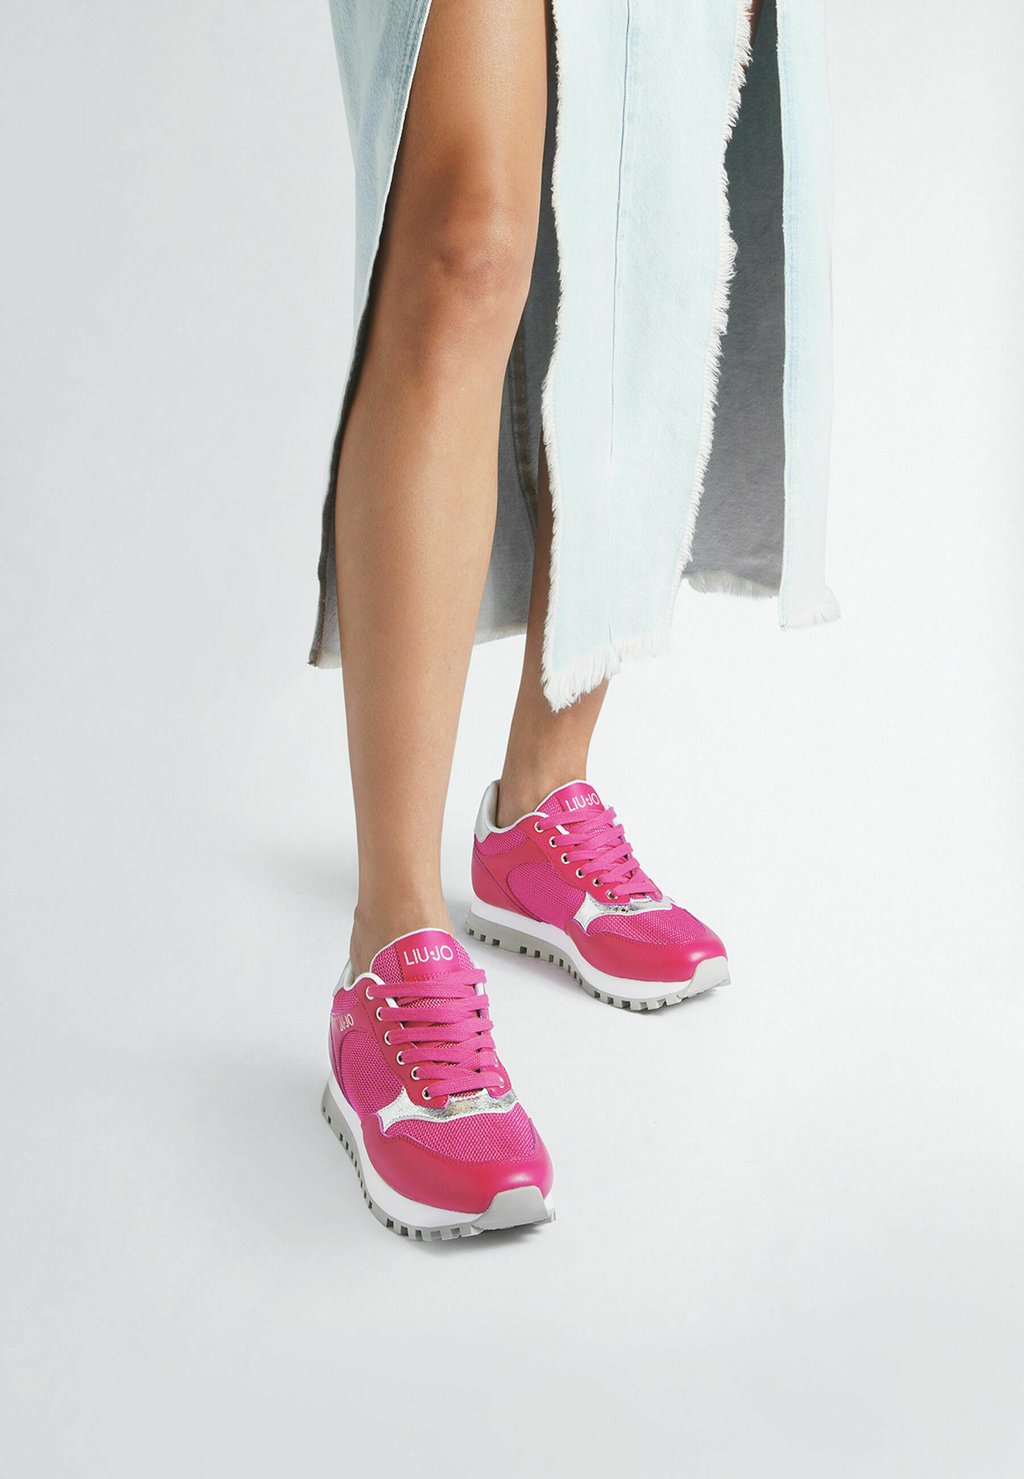 Низкие кроссовки Brighty LIU JO, розовый кроссовки низкие liu jo brighty mesh platform sneakers цвет silver colour